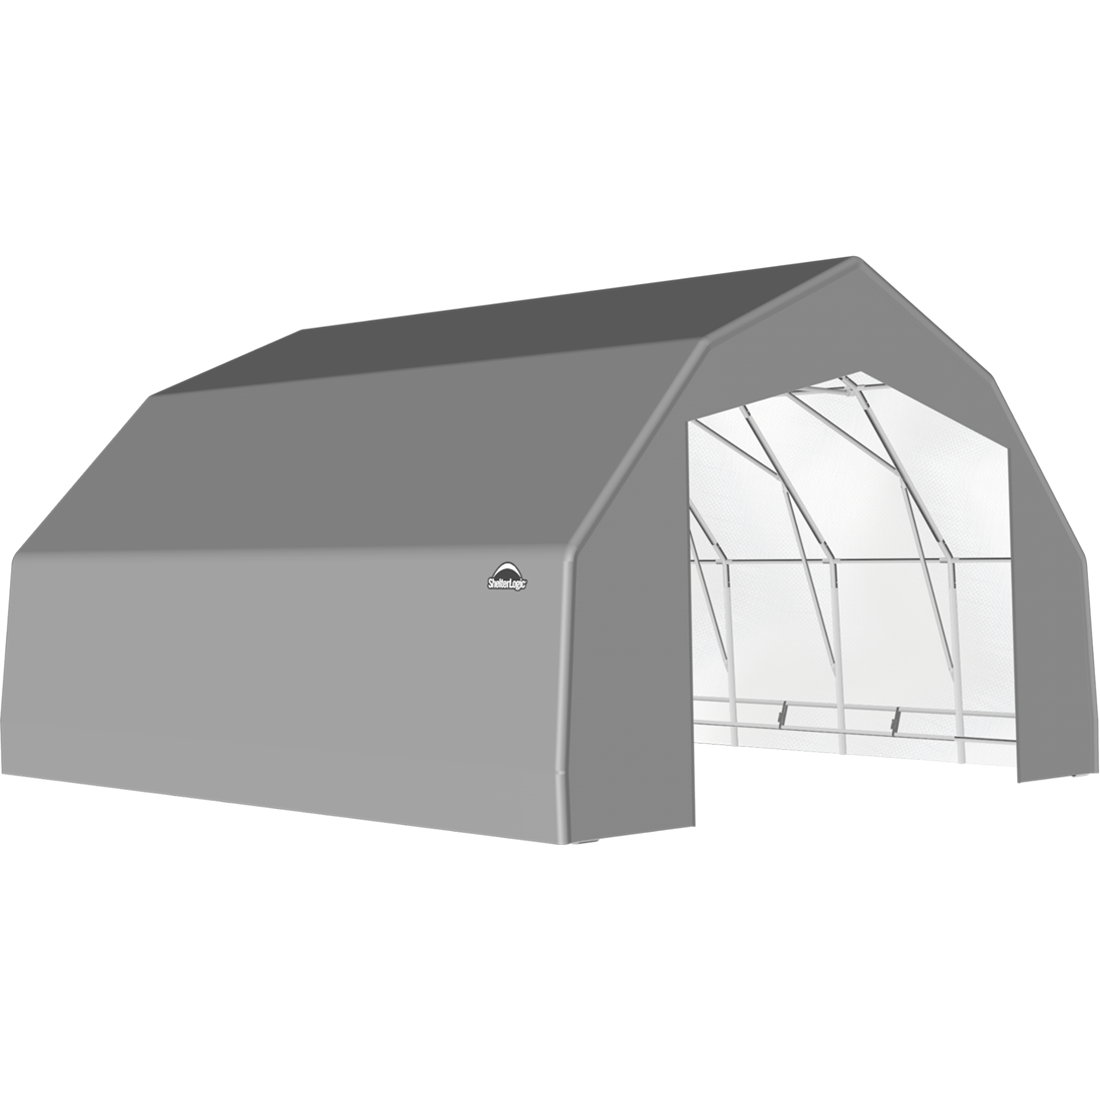 ShelterTech SP Series Barn Shelter, 25 ft. x 24 ft. x 14 ft. Heavy Duty PVC 14.5 oz. Gray